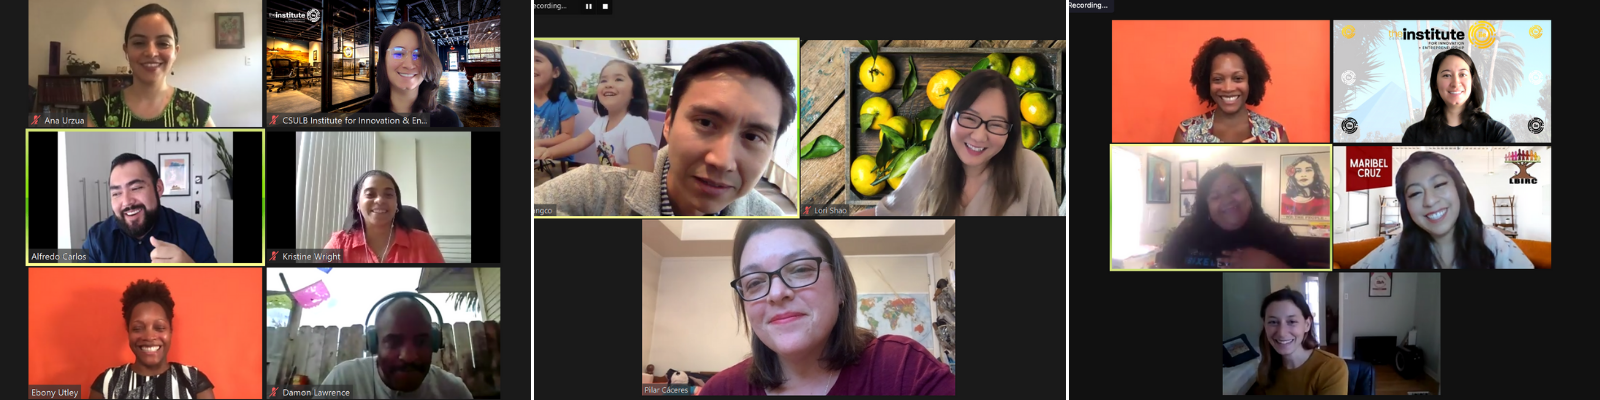 screenshots of zoom meetings, all diverse group of people